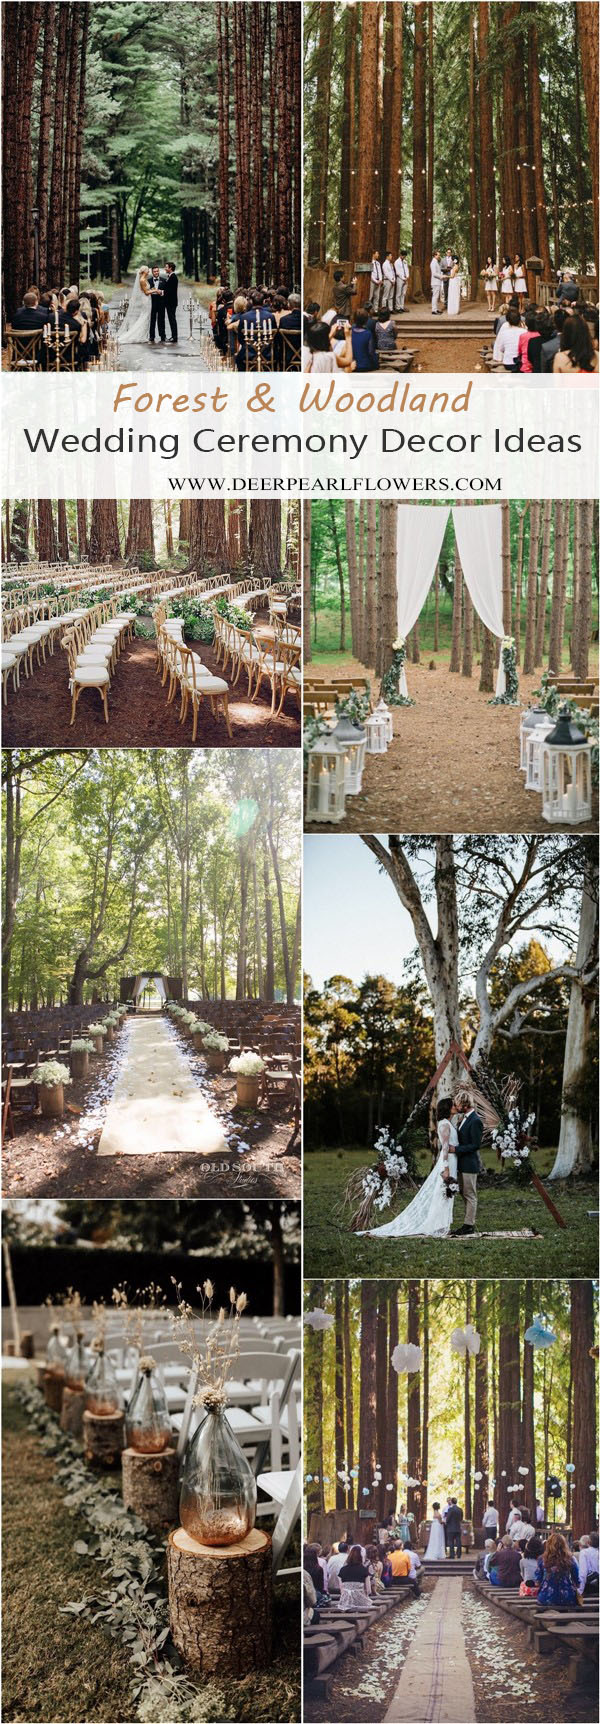 outdoor wedding ideas - forest woodland wedding ceremony decor ideas